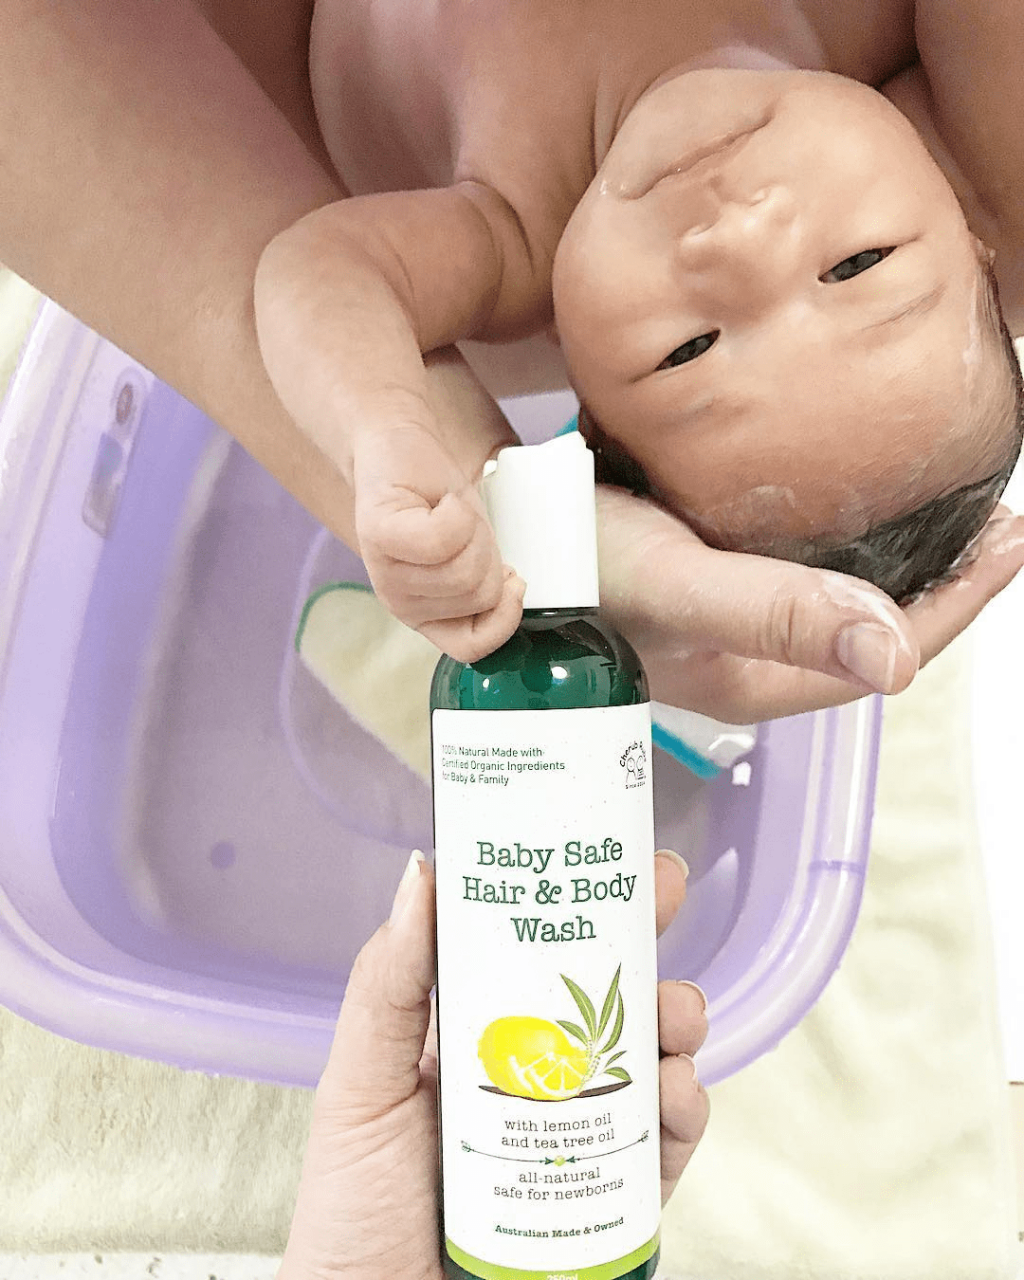 Cherub rubs baby safe hair and body wash 